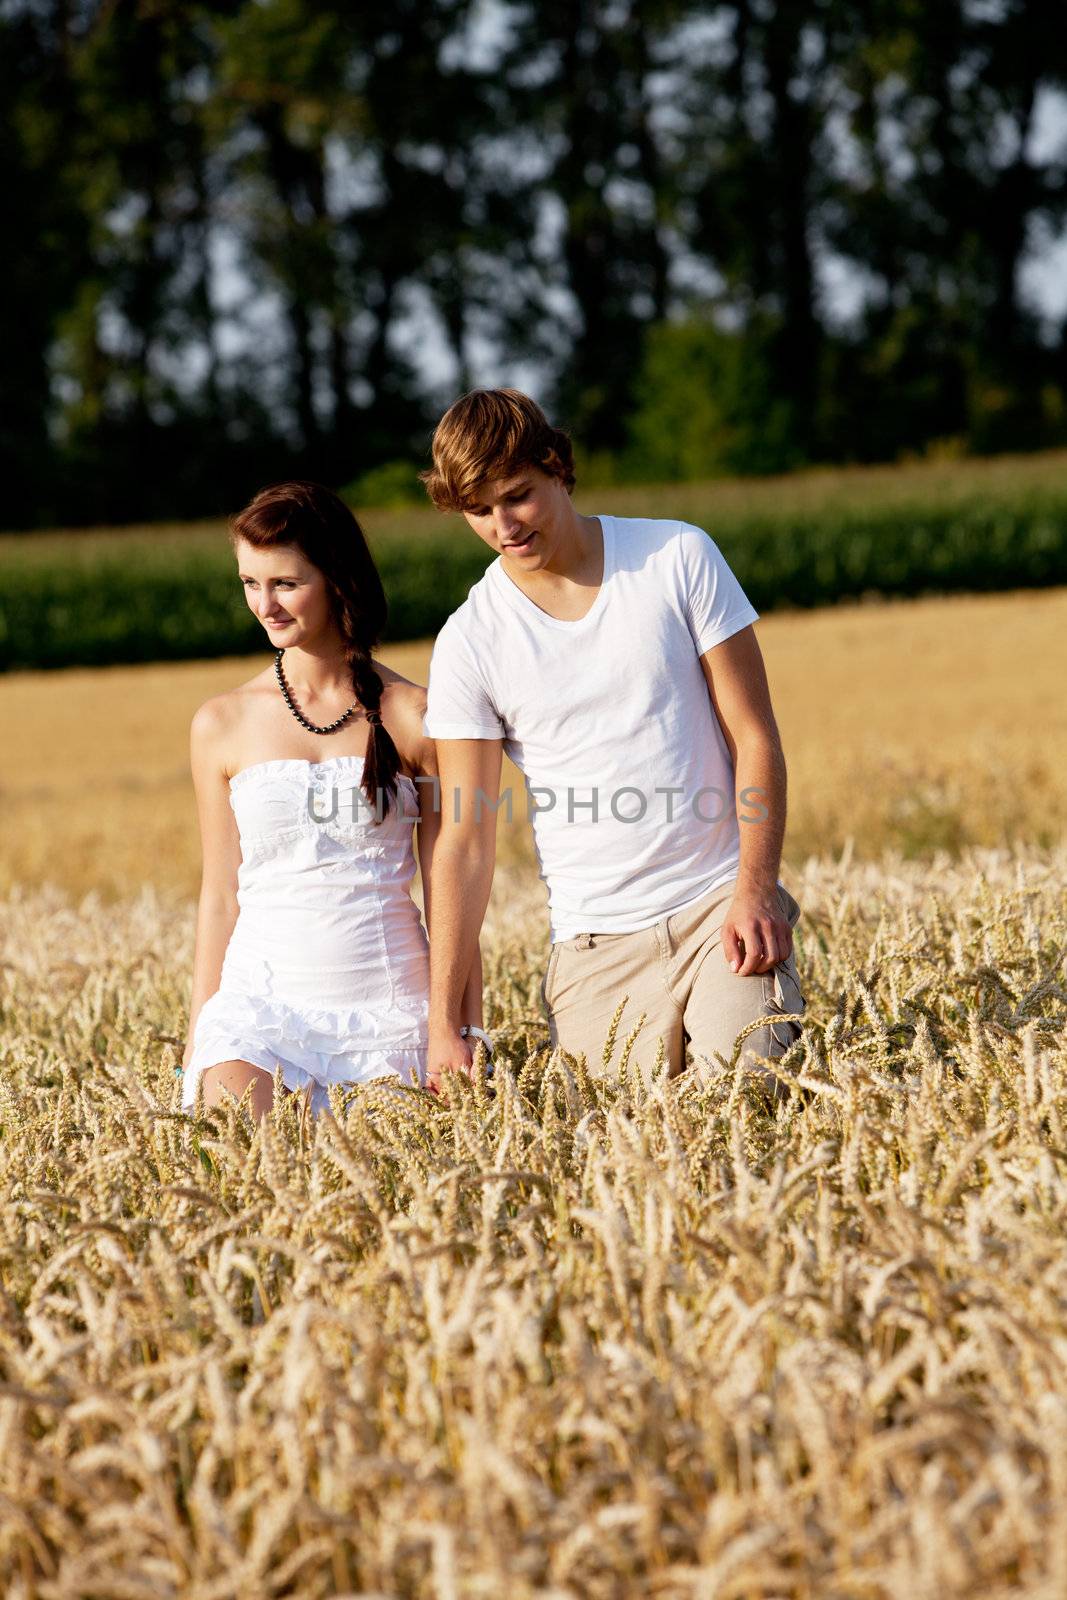 happy couple in love outdoor in summer on field having fun